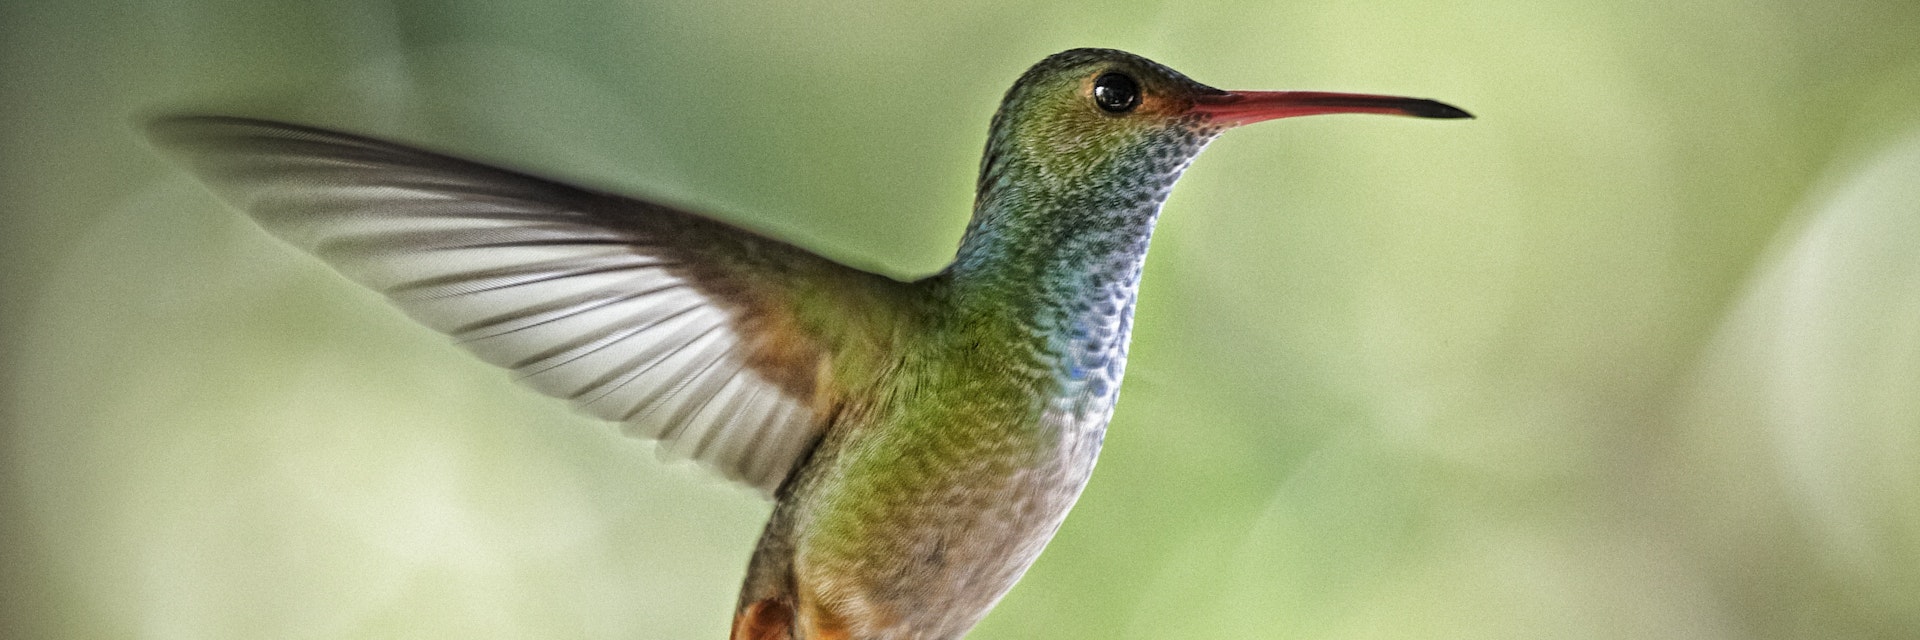 Rufous-tailed hummingbird in flight.